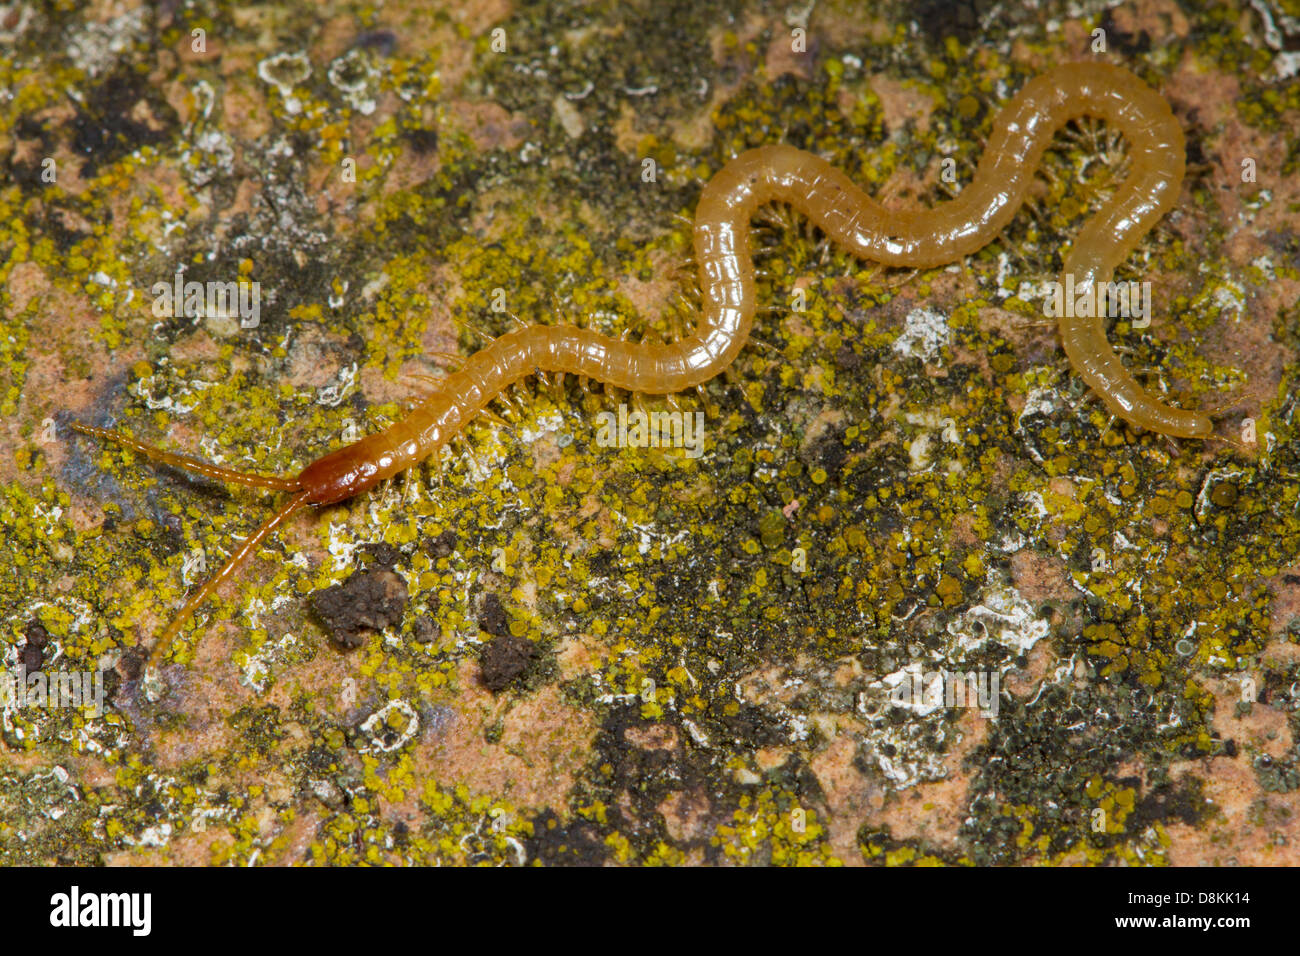 Western Yellow Centipede (Stigmatogaster subterranea) Stock Photo